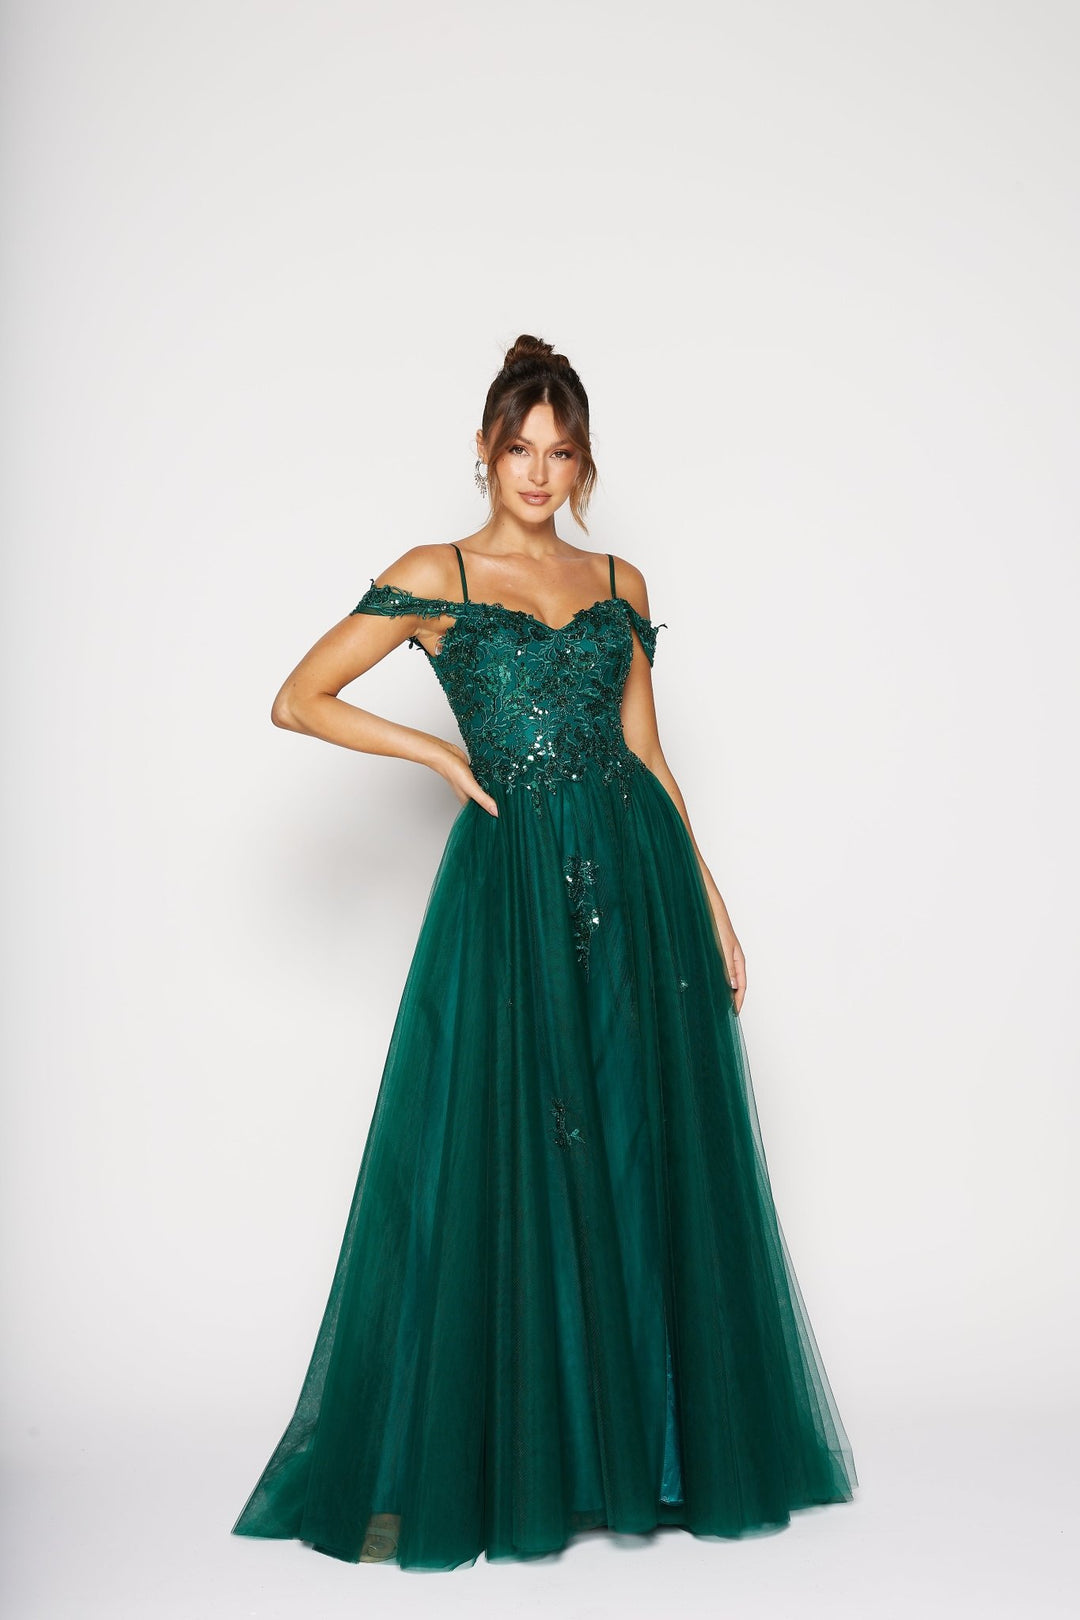 Brenna Dress by Tania Olsen PO2446 - ElissaJay Boutique